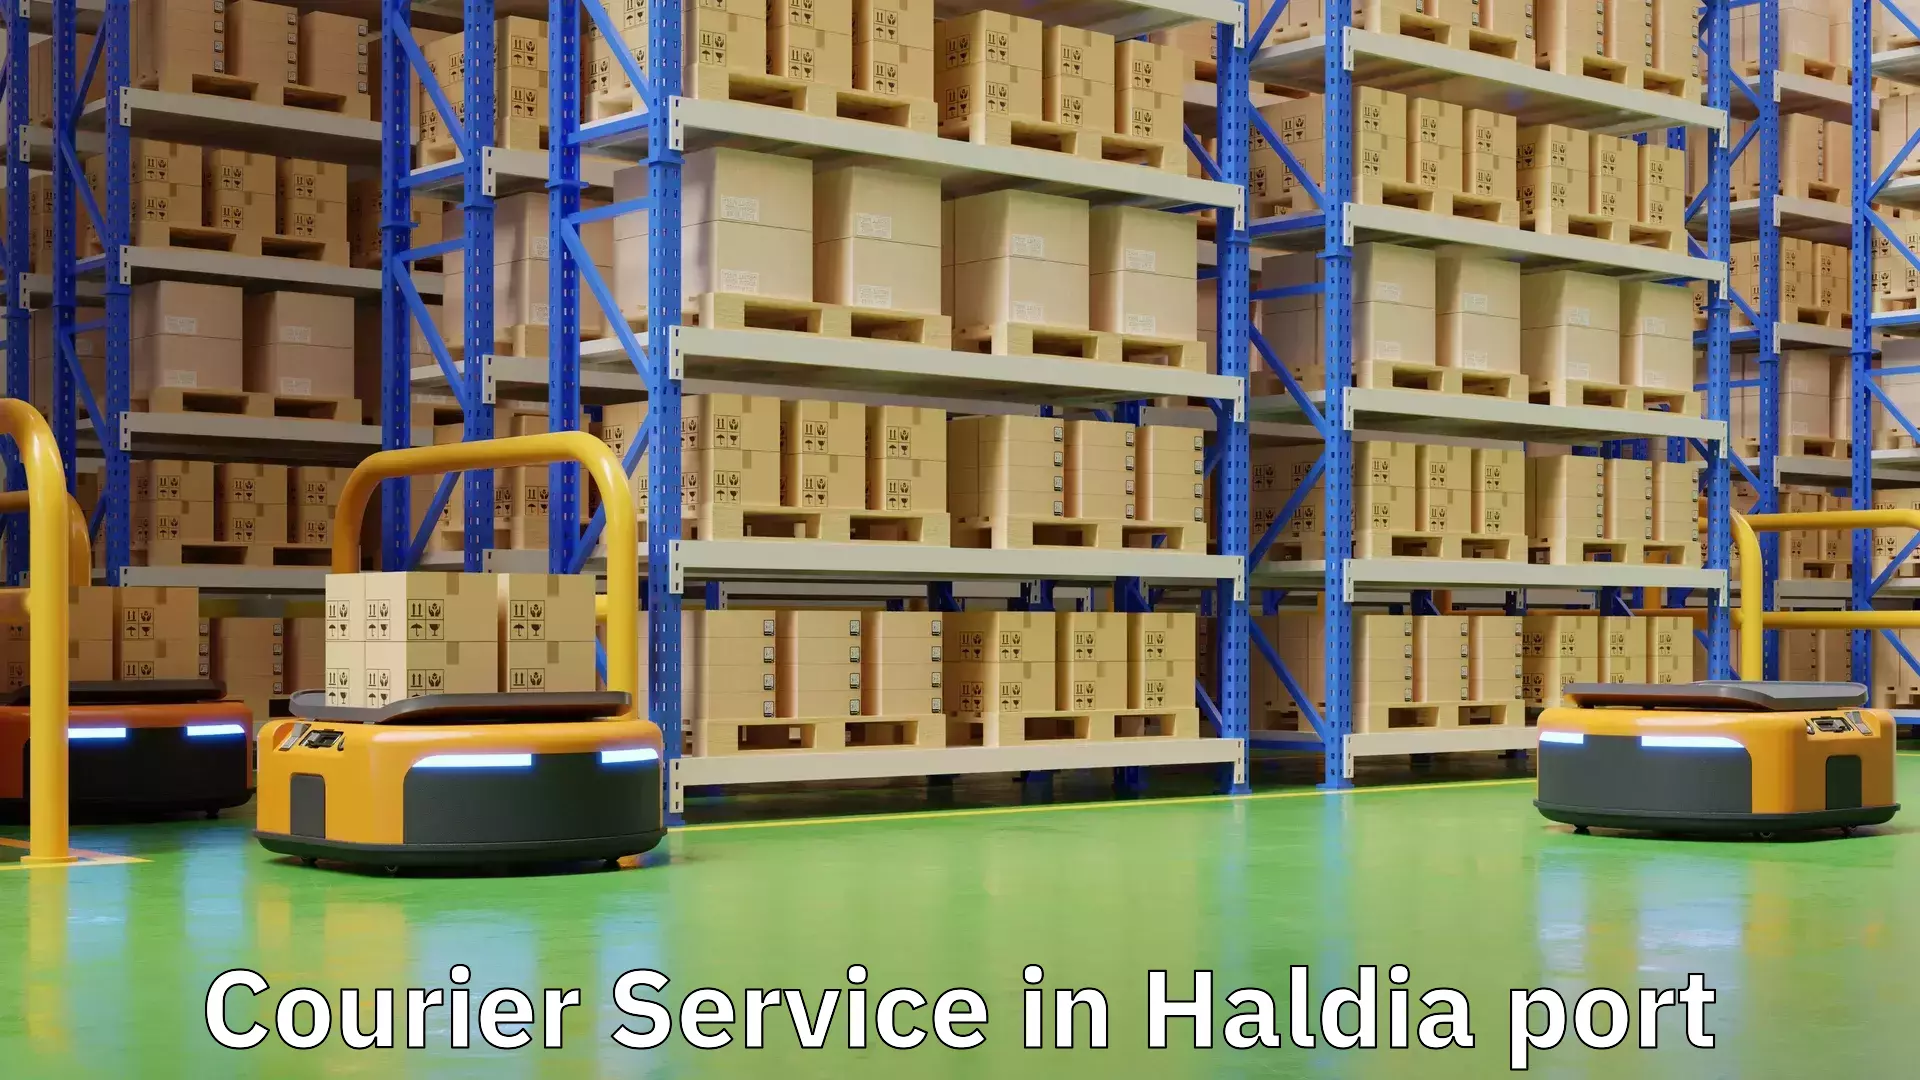 Budget-friendly shipping in Haldia port